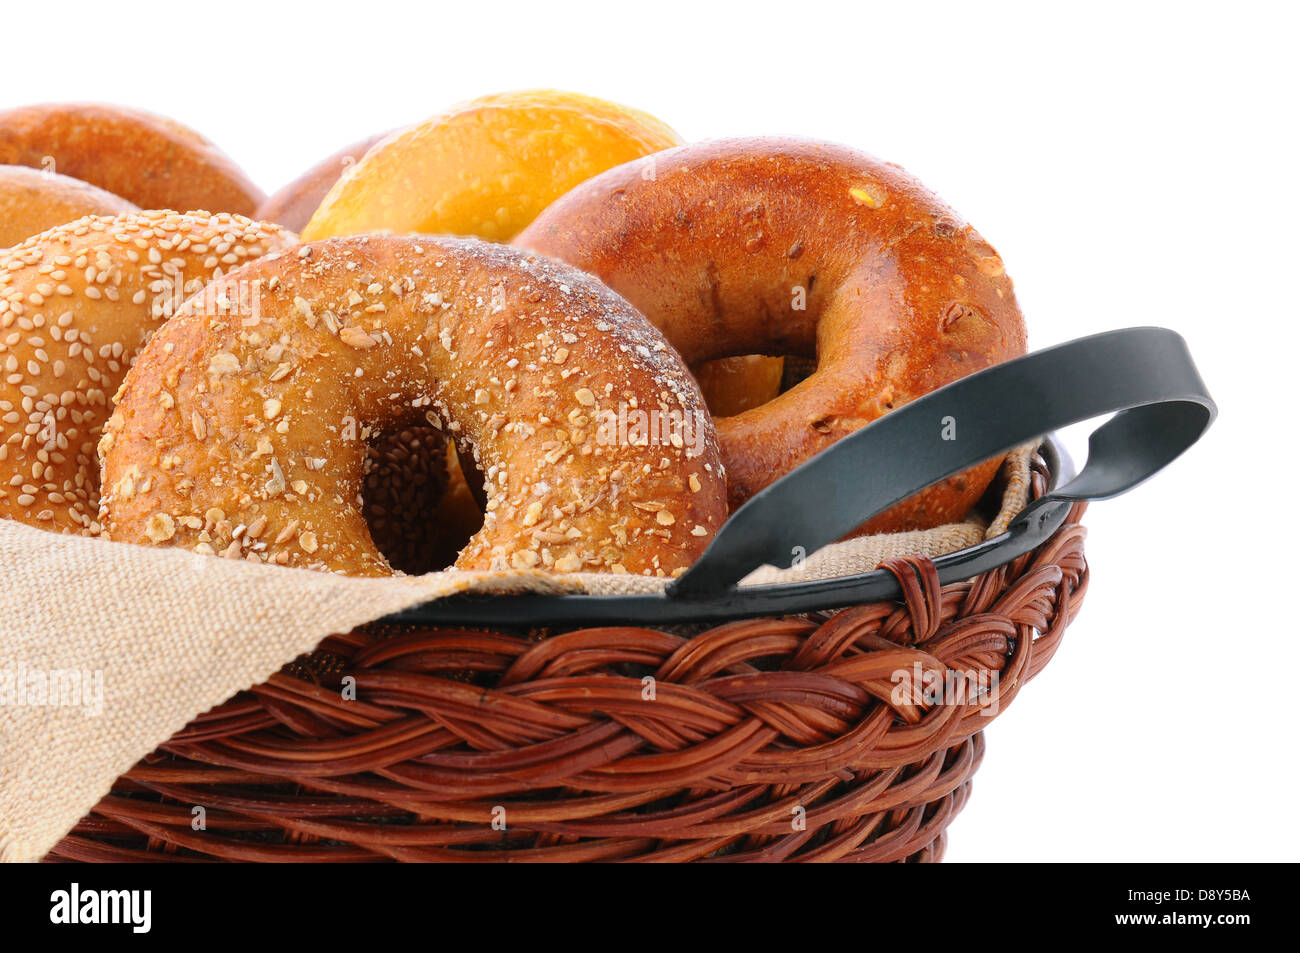 Closeup of assorted fresh bagels in a basket, including egg, sesame seed, multi-grain, plain, and cinnamon raisin. Stock Photo